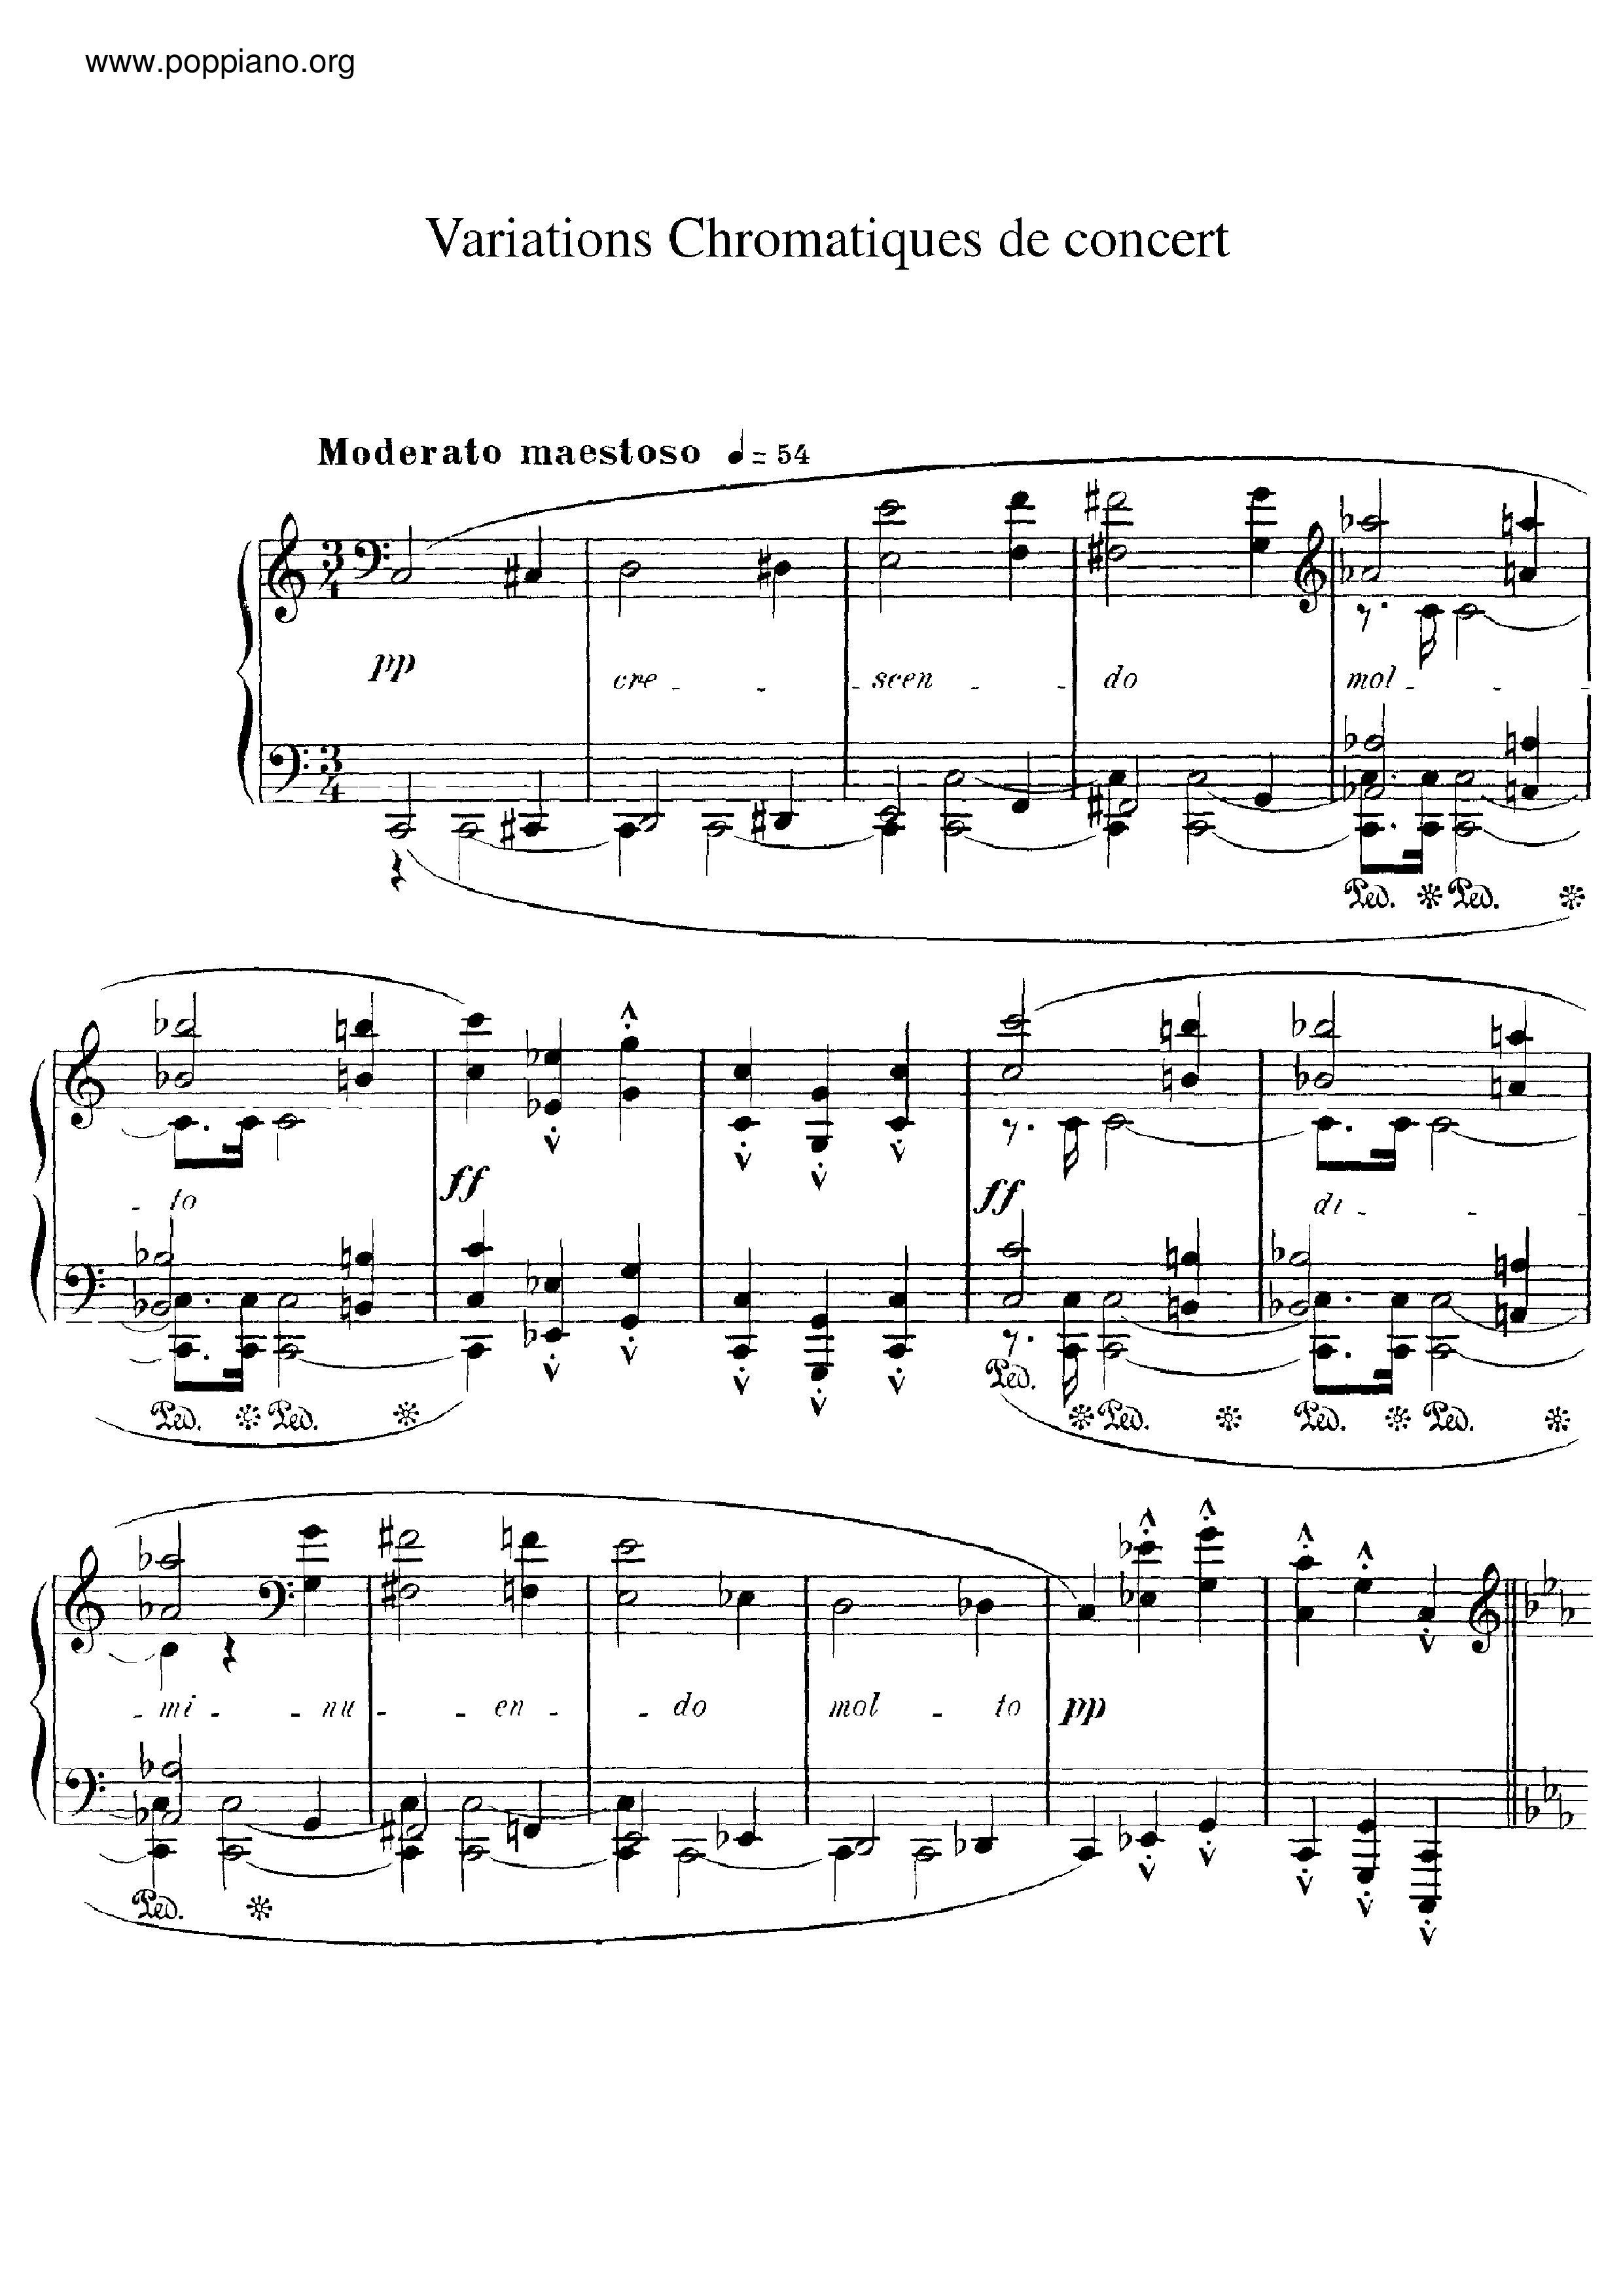 Variations Chromatiques de Concertピアノ譜